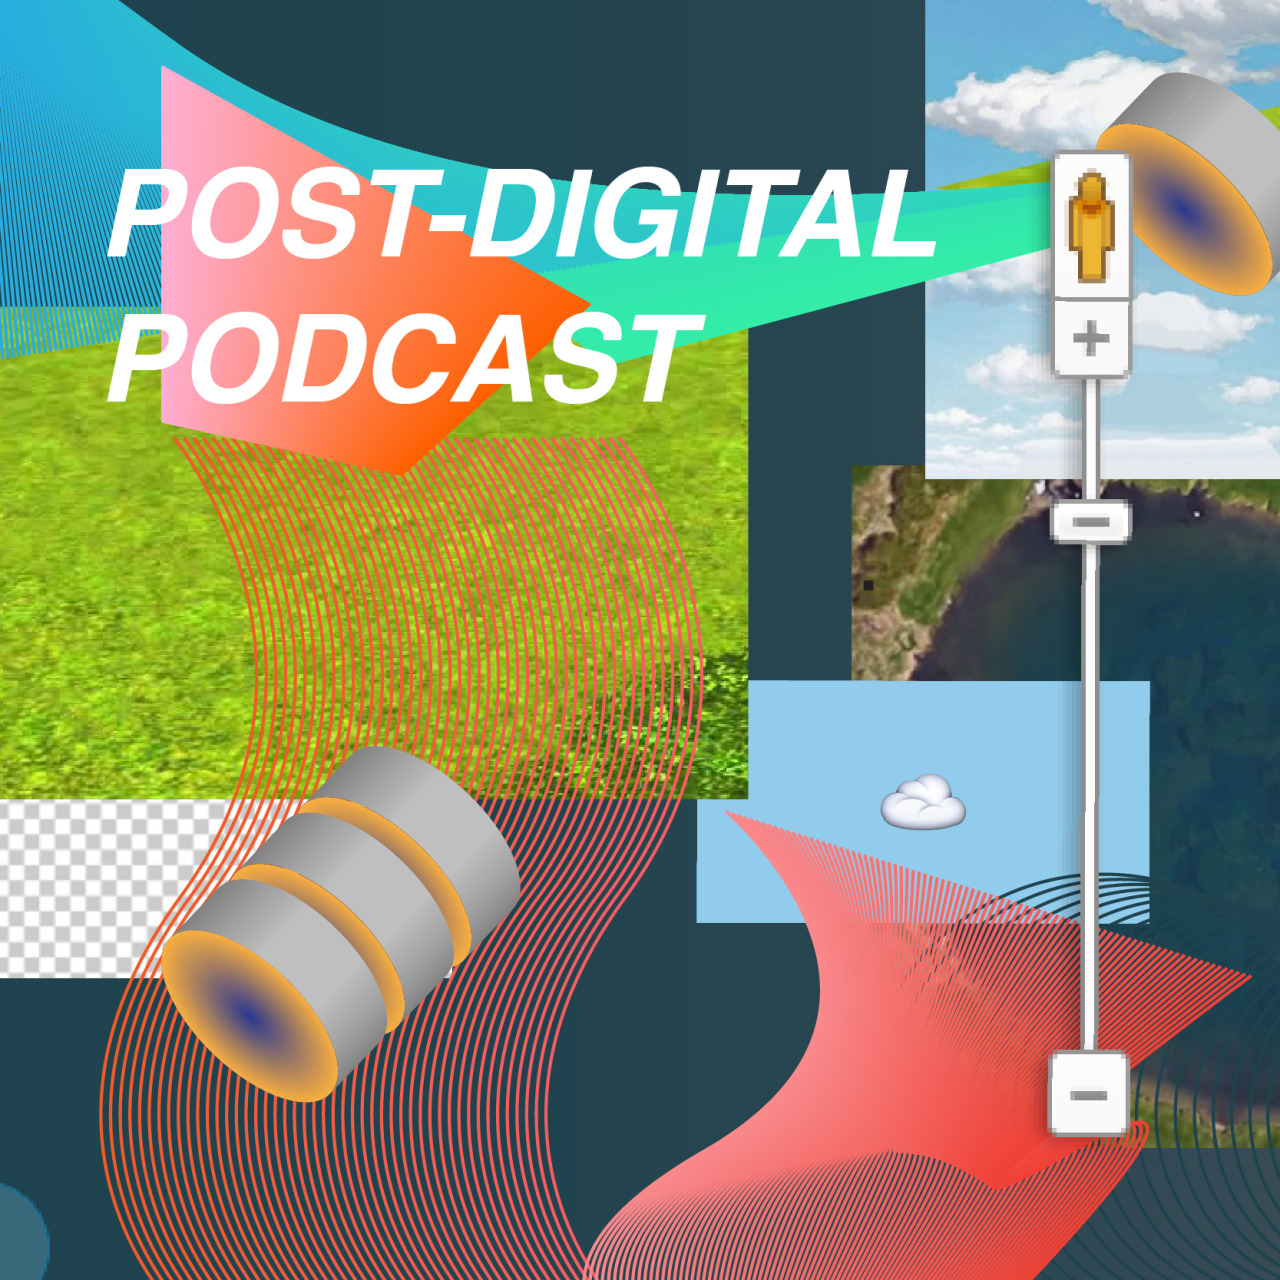 Artwork
What: Post Digital Podcasts
Client: Nadine Roestenburg (NL)